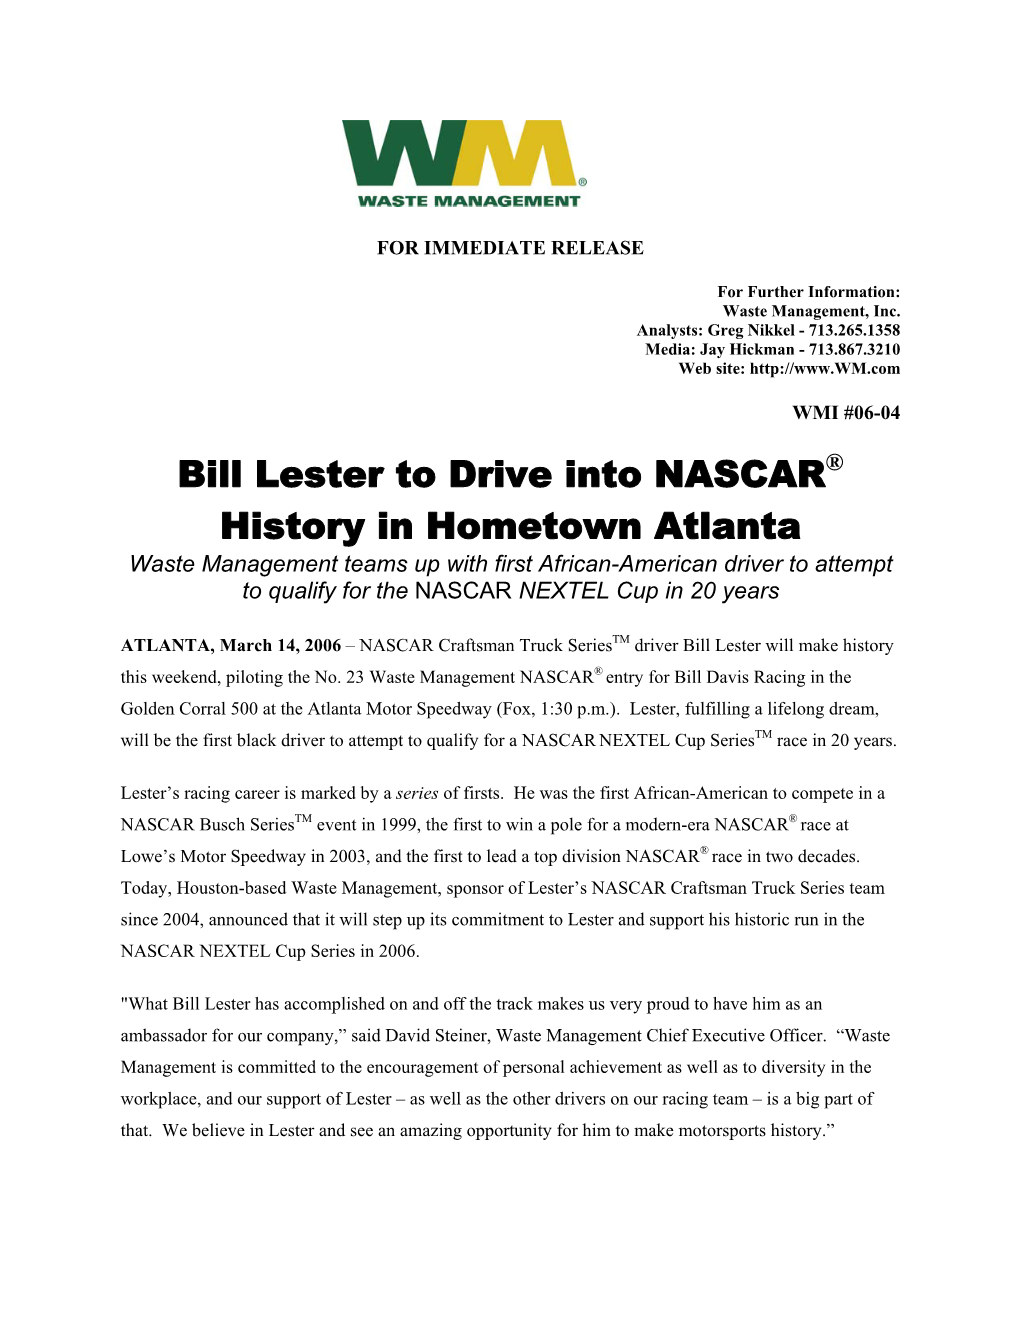 Bill Lester to Drive Into NASCAR® History in Hometown Atlanta